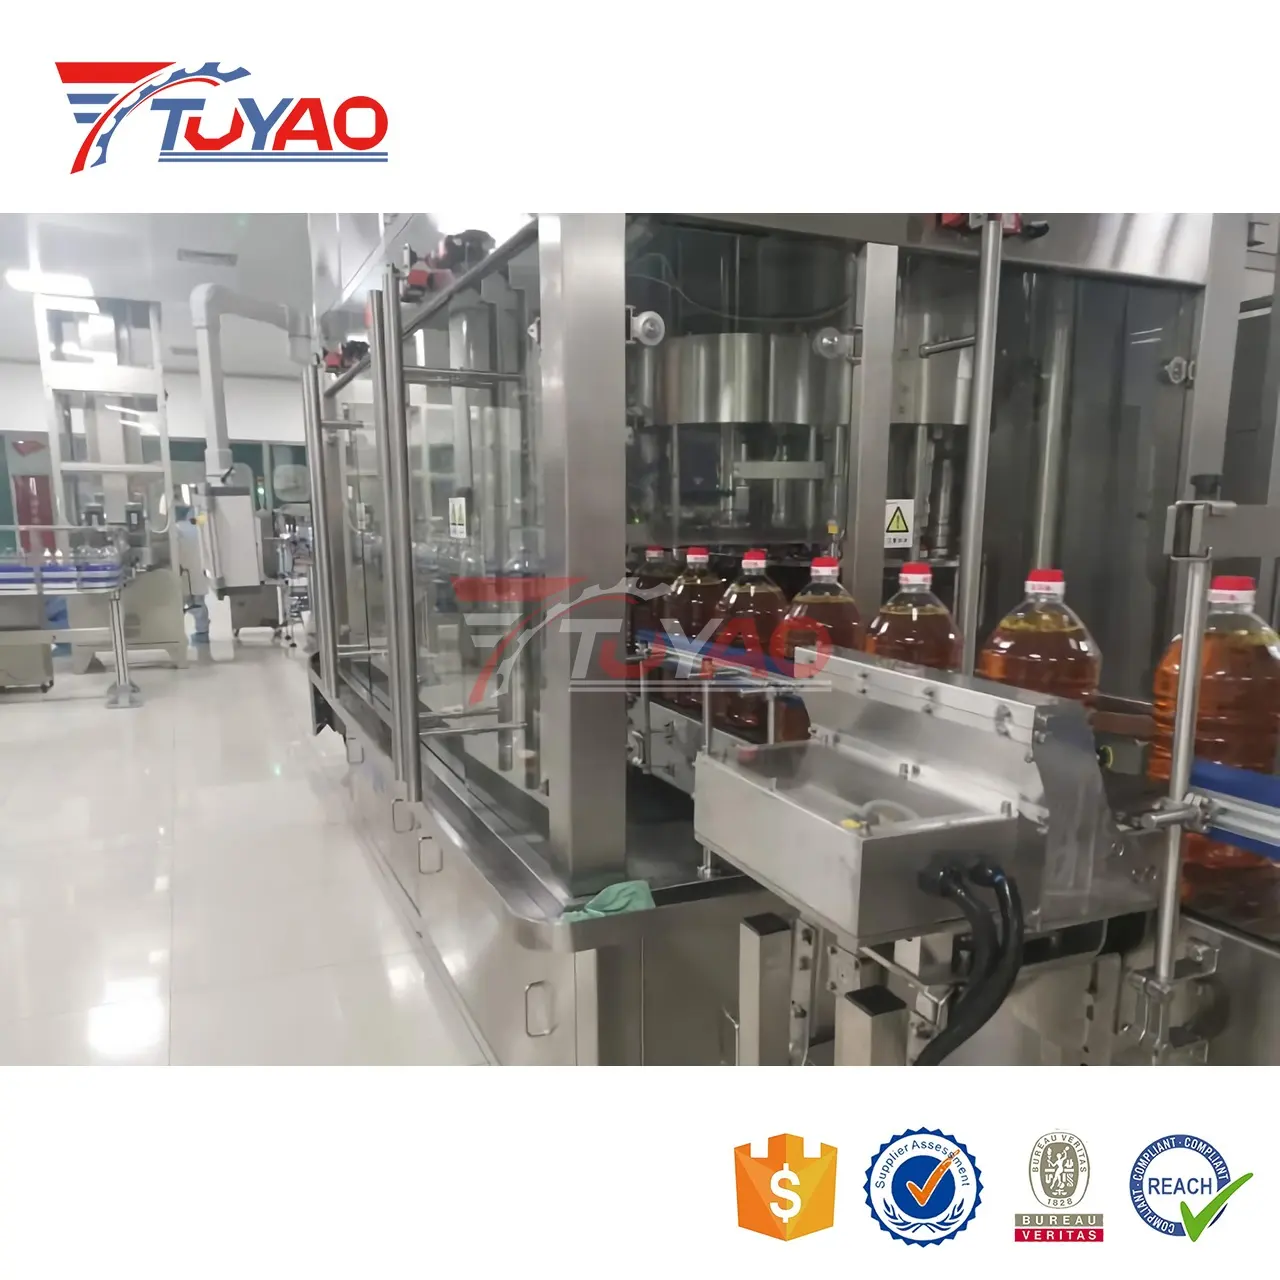 Tuyao Load Cell Plant Eetbare Olie Vullen Bakolie Vulling Capping En Etikettering Machine Eetbare Olie Vulmachine